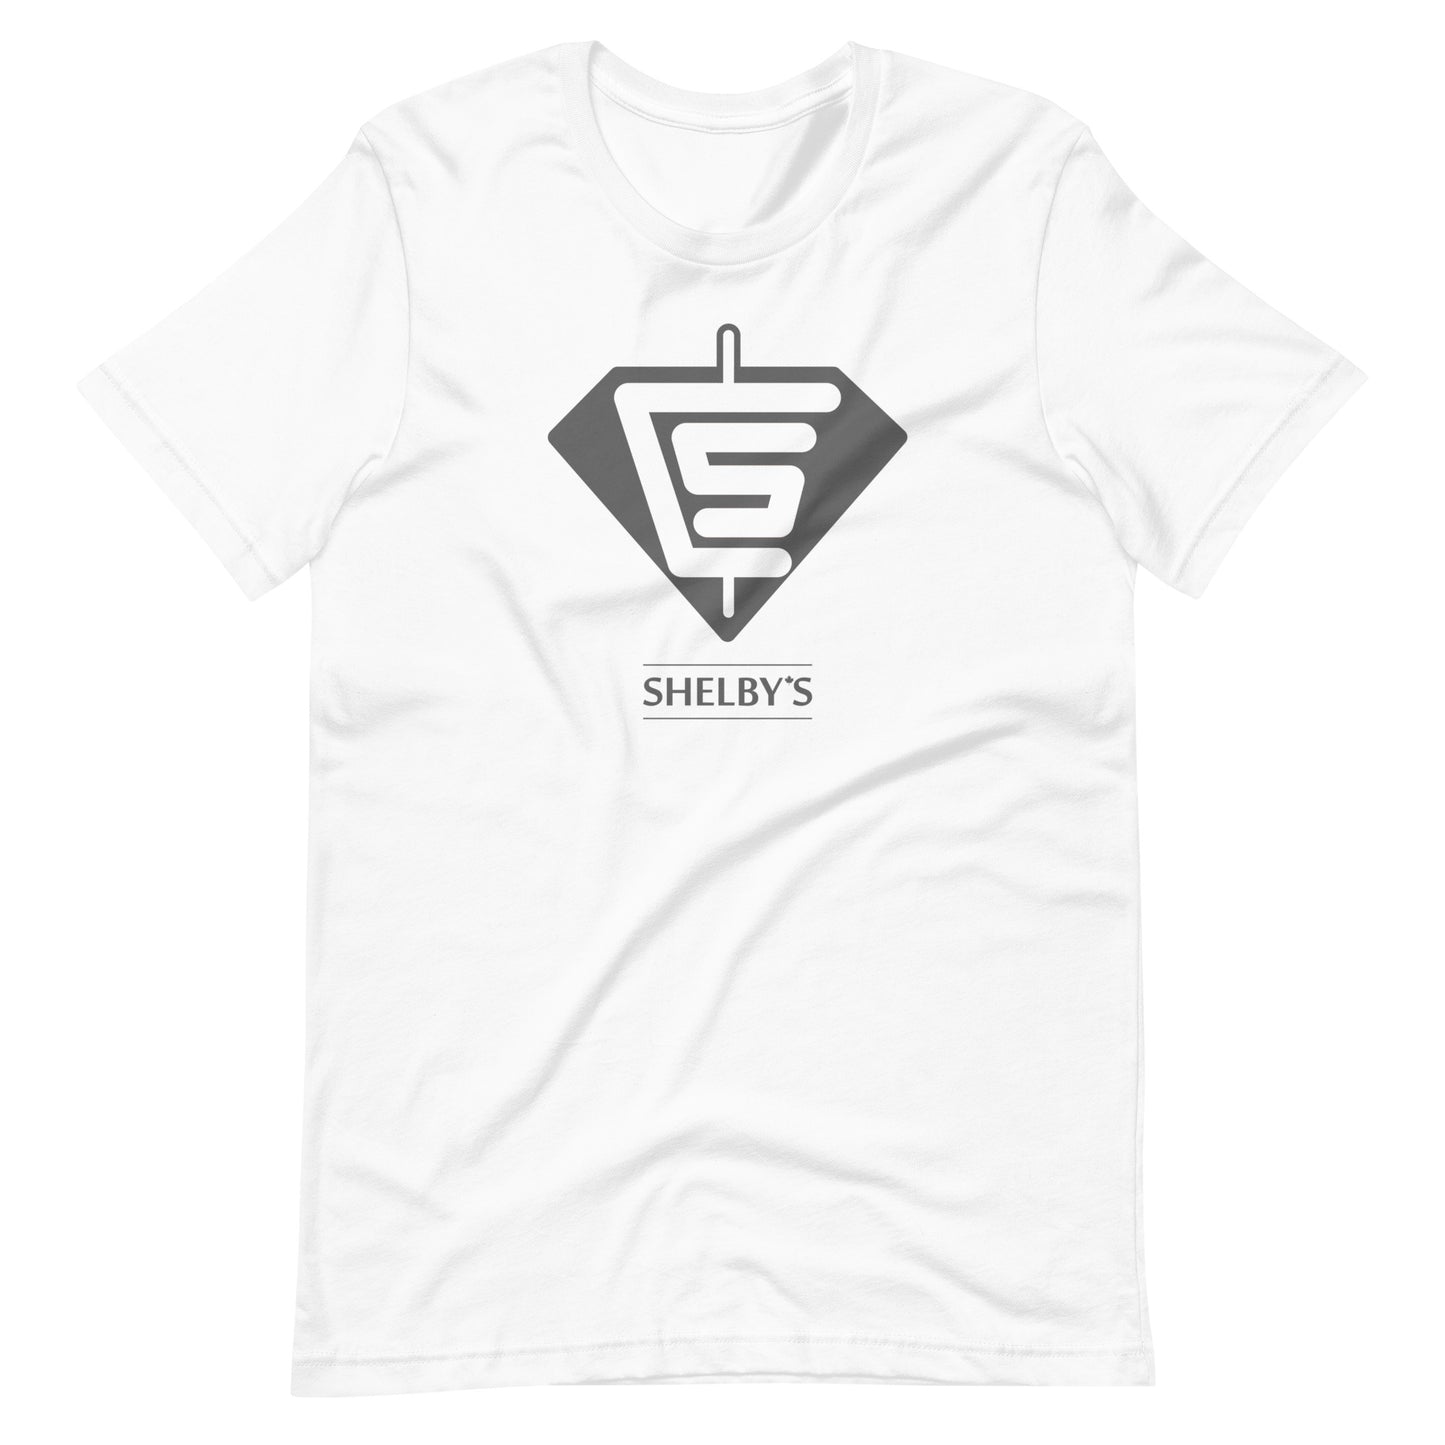 Super Shelby's - T-shirt